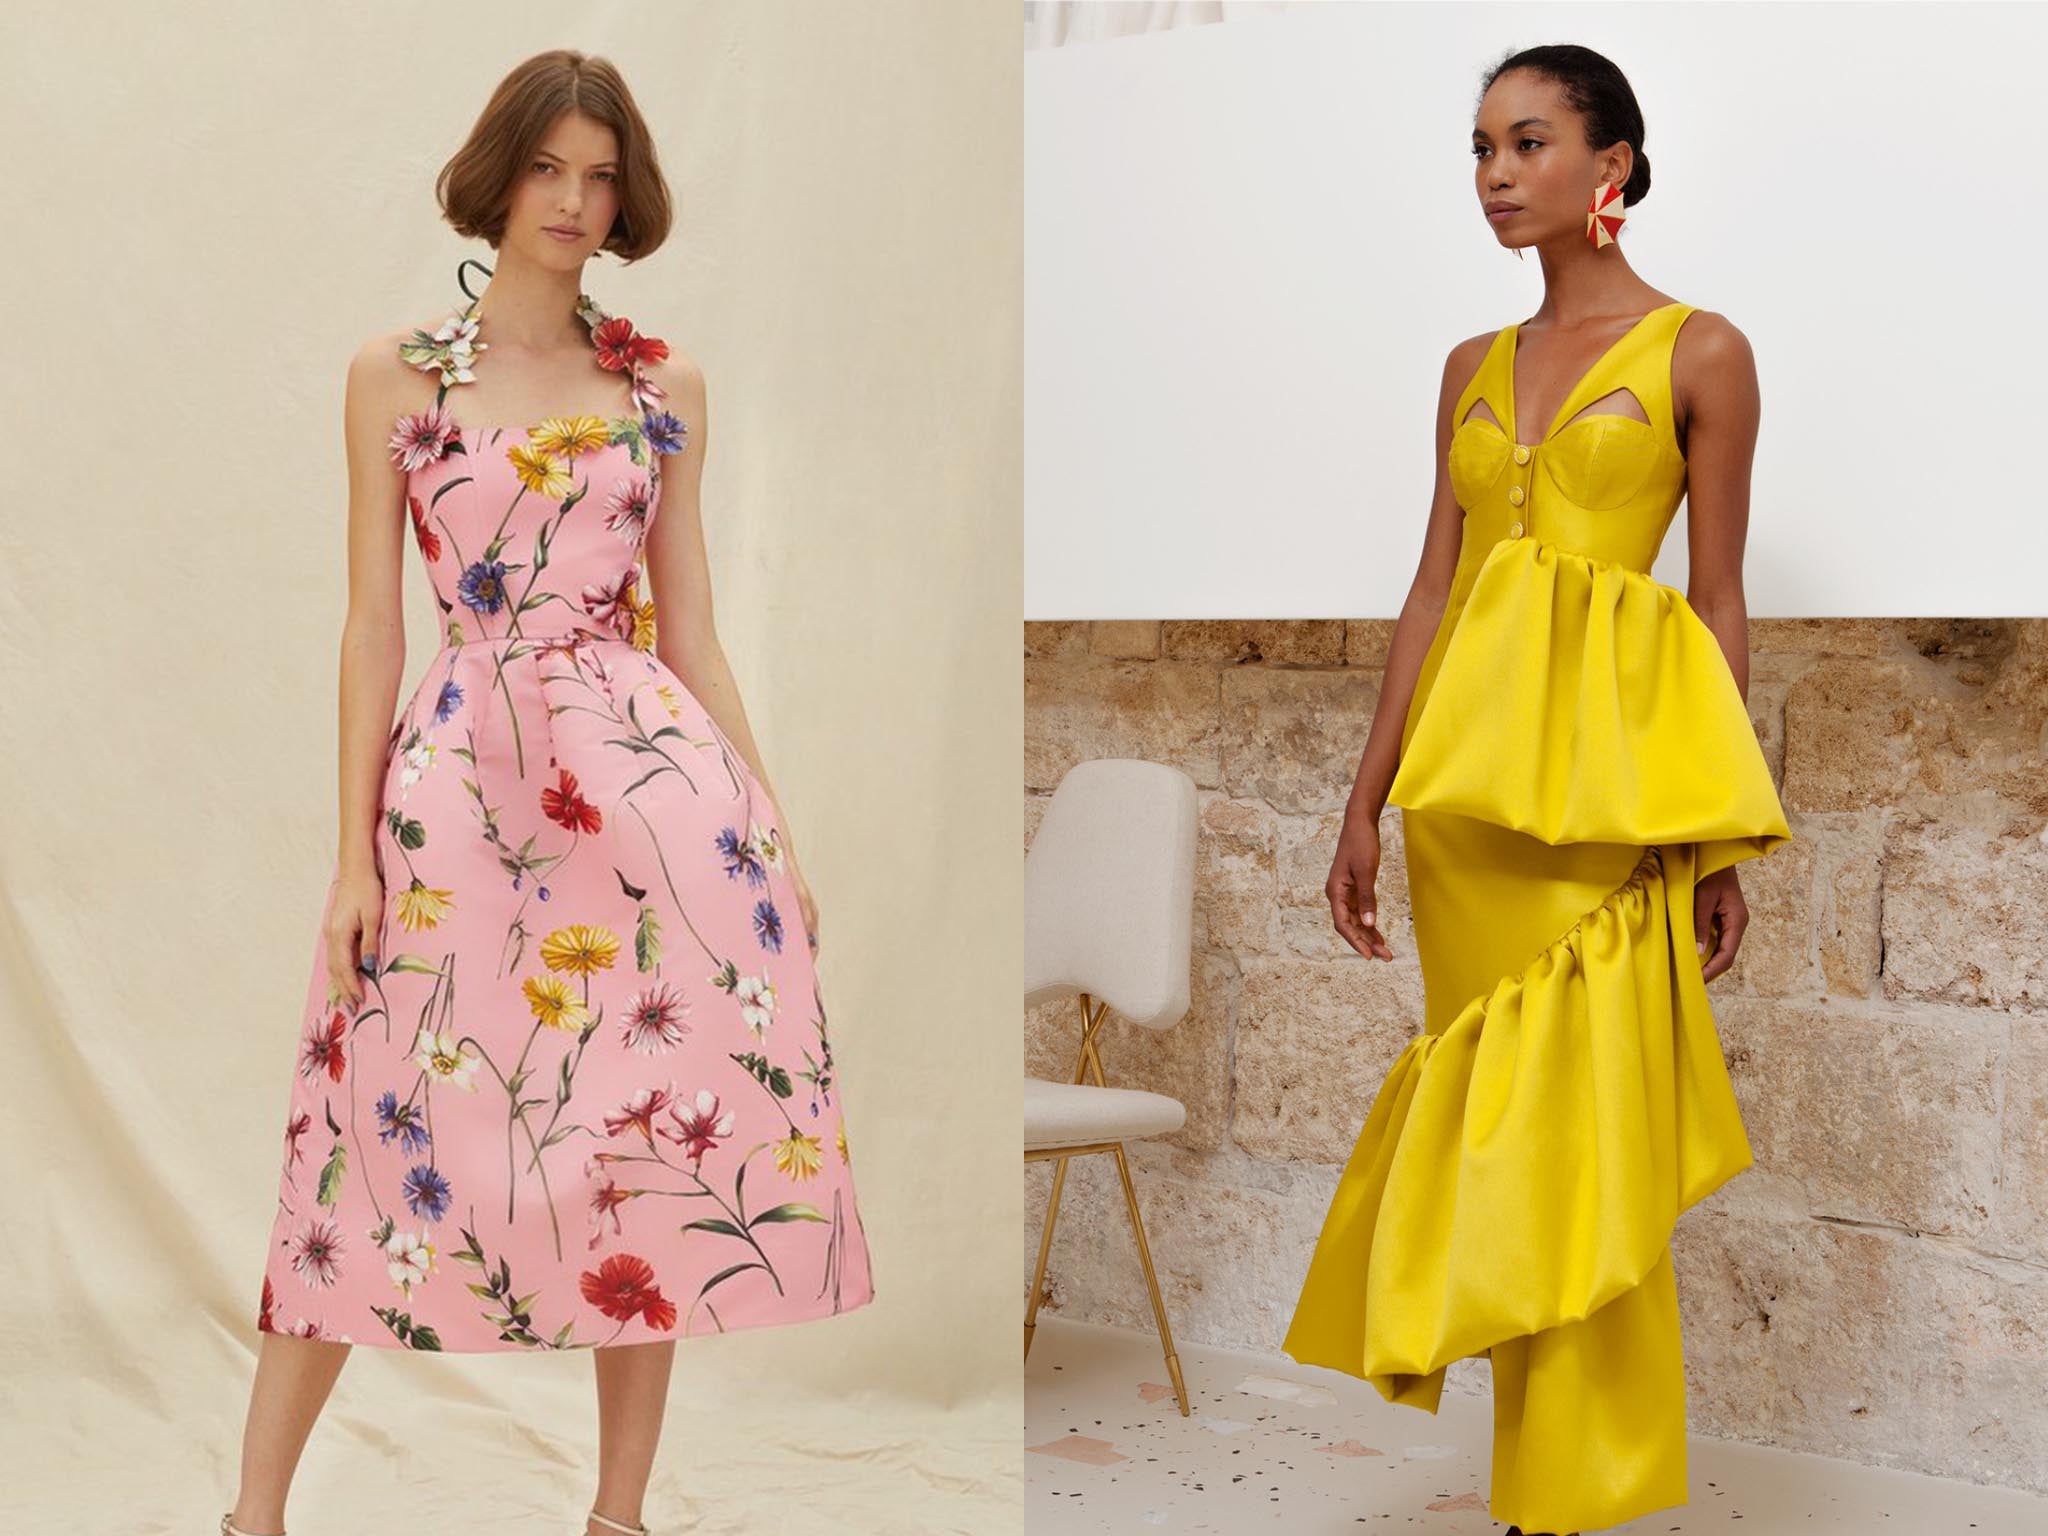 Shop the latest fashion from designers including Isabel Marant and Oscar de la Renta